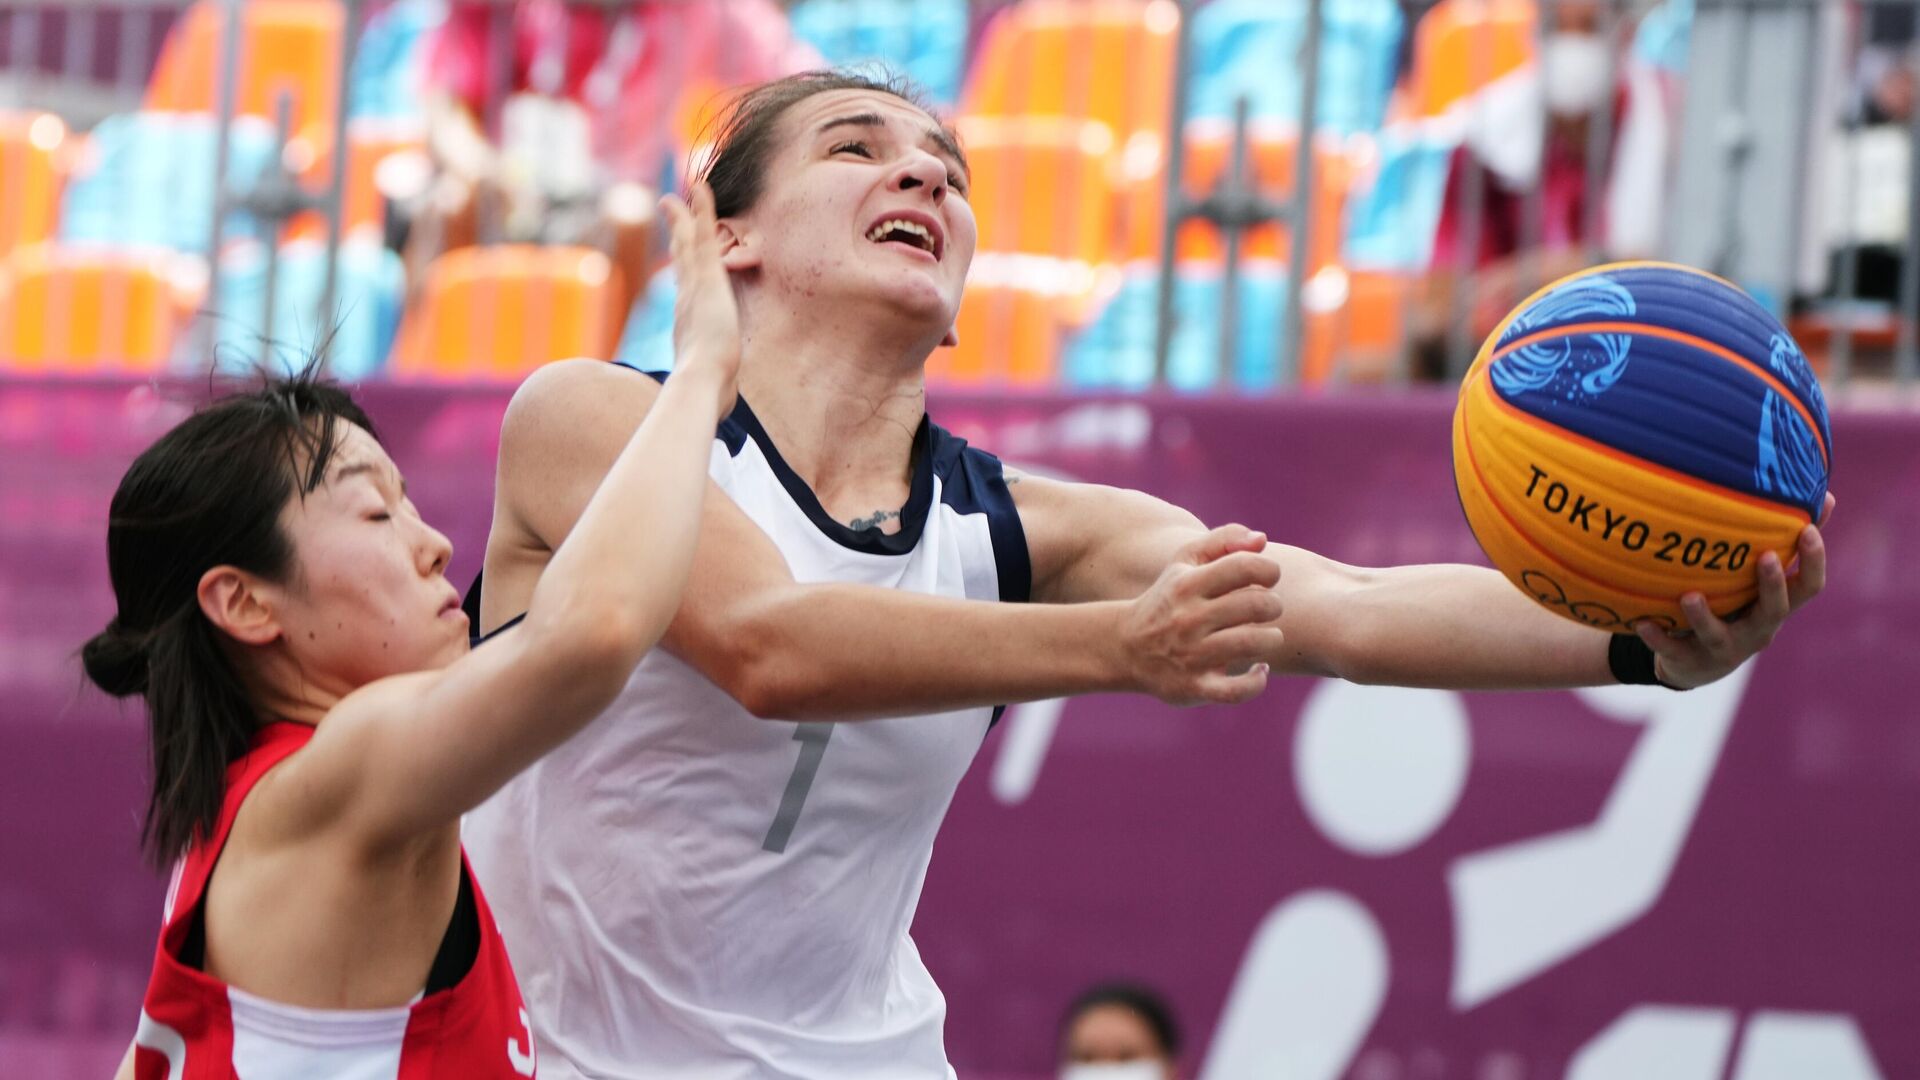 Женский баскетбол включен в программу олимпийских игр. Баскетбол 3х3 сборная России 2020.